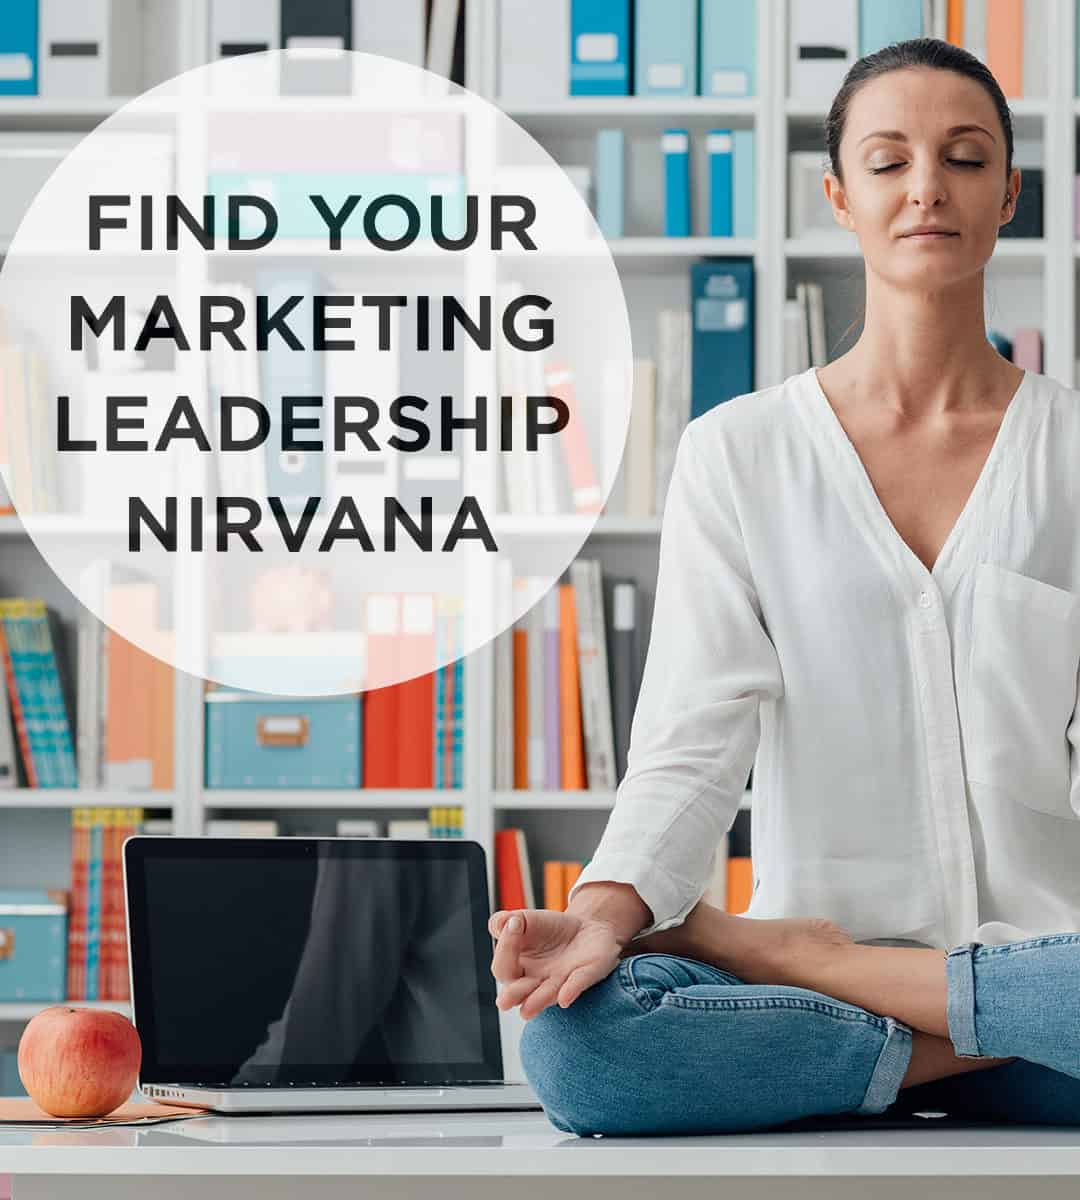 Find your Marketing Leadership Nirvana